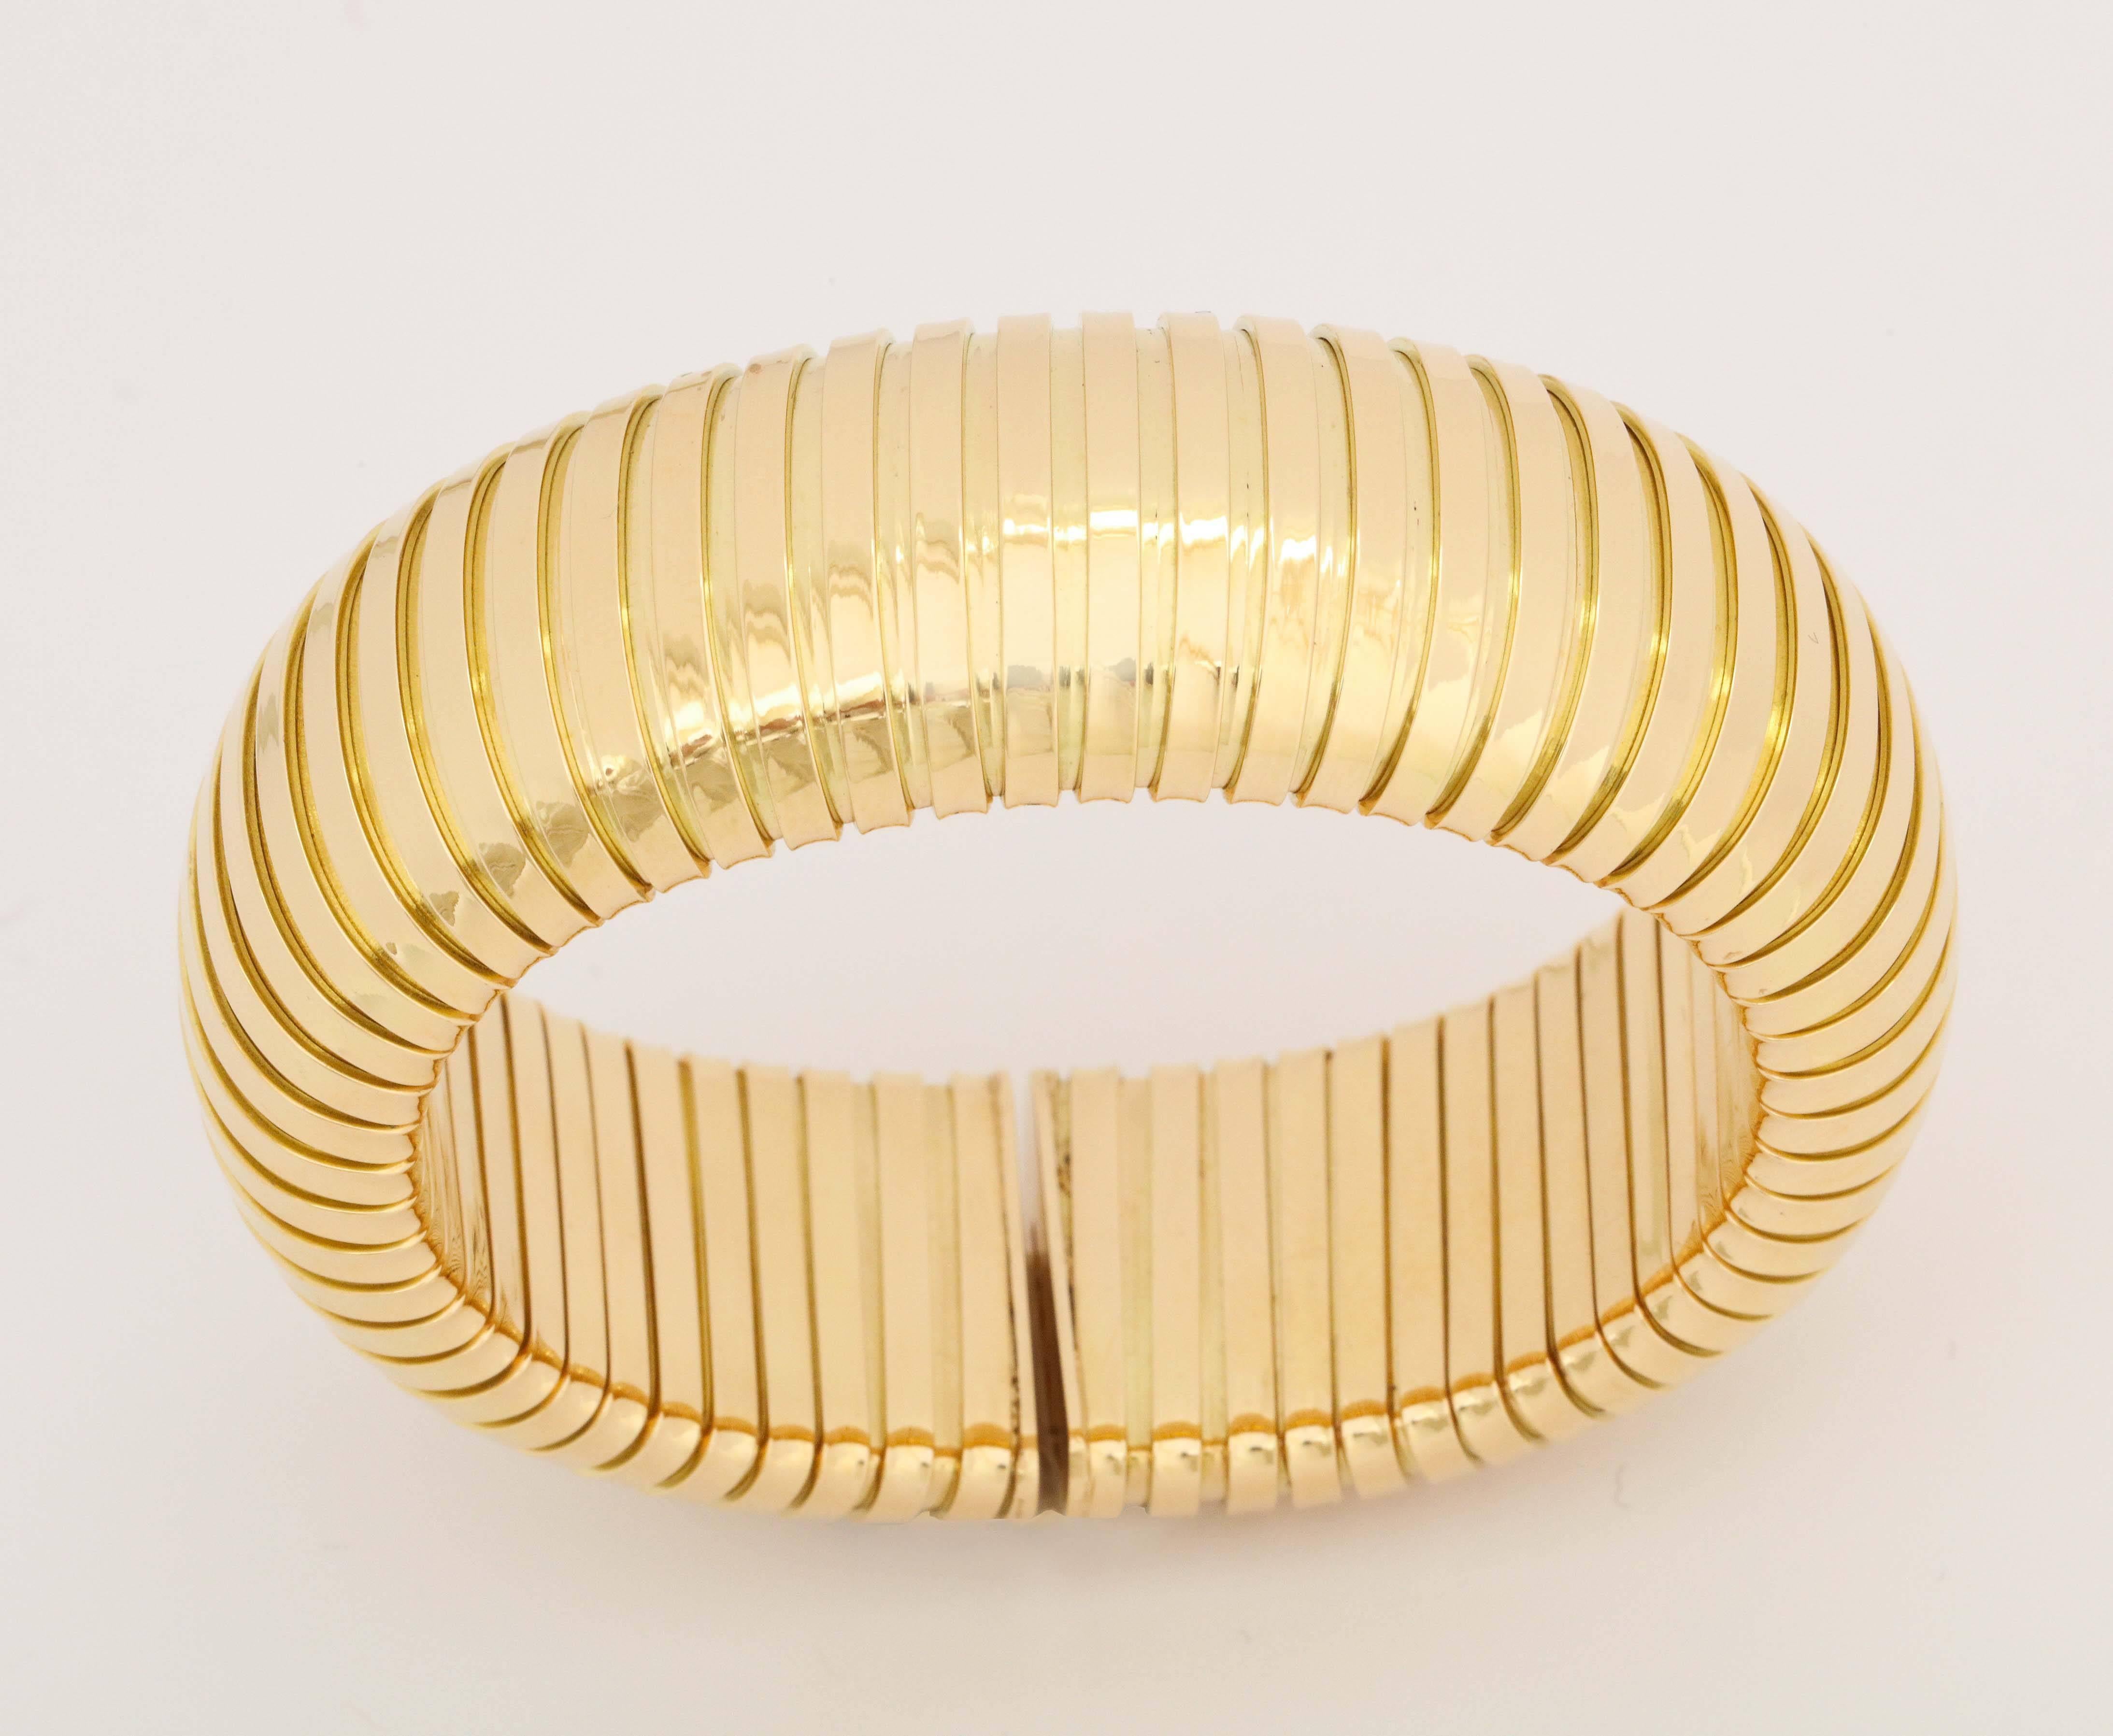 18k yellow gold tubogas bracelet
25mm wide  
